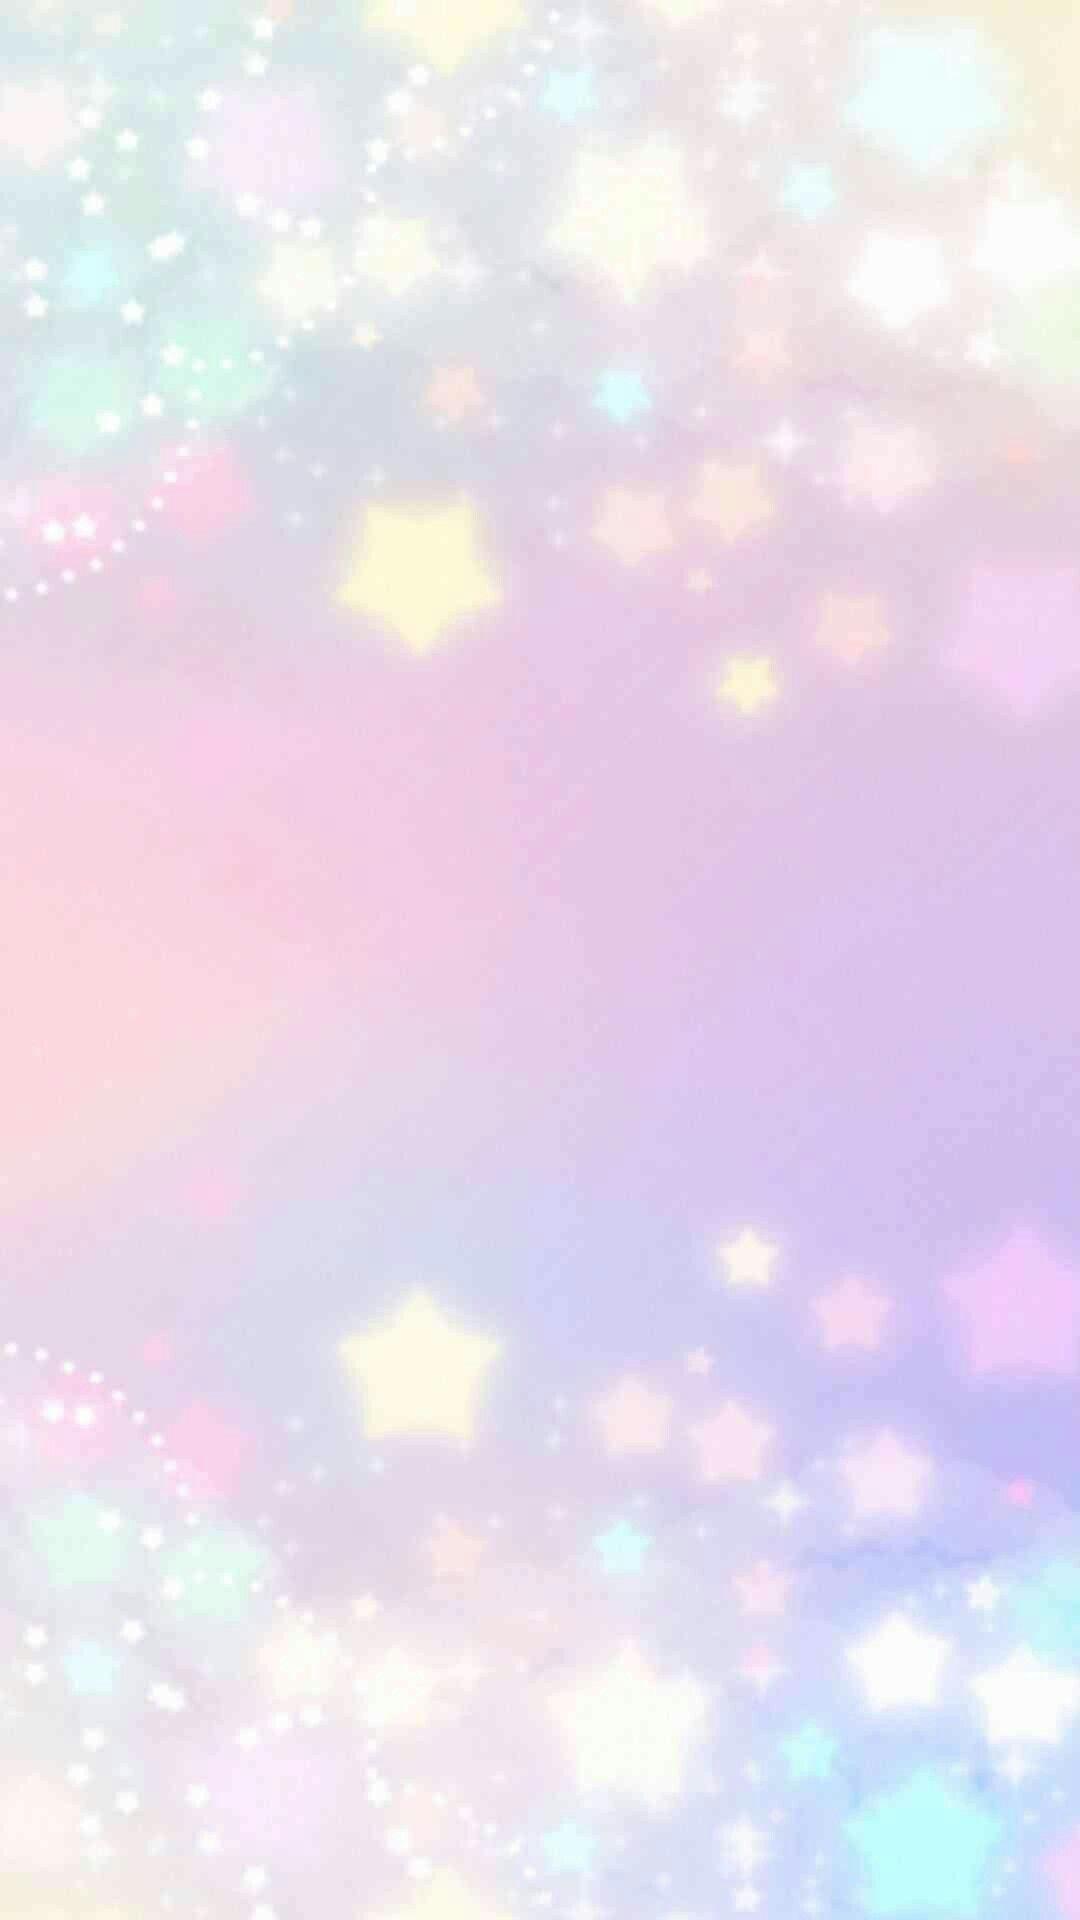 Kawaii Pastel Rainbow Wallpaper